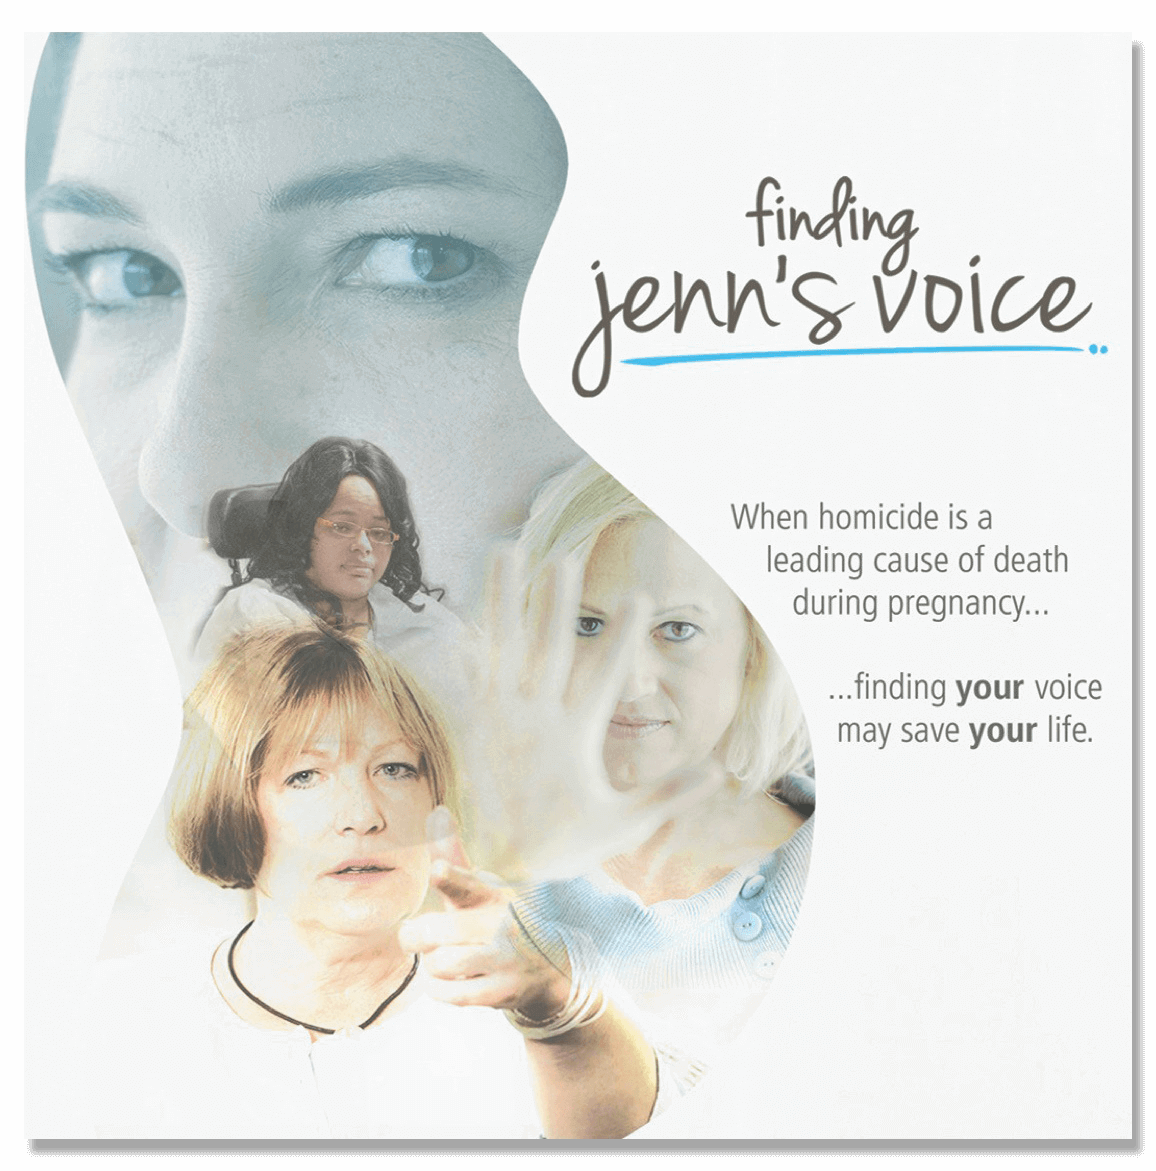 Finding jenns Voice flyer